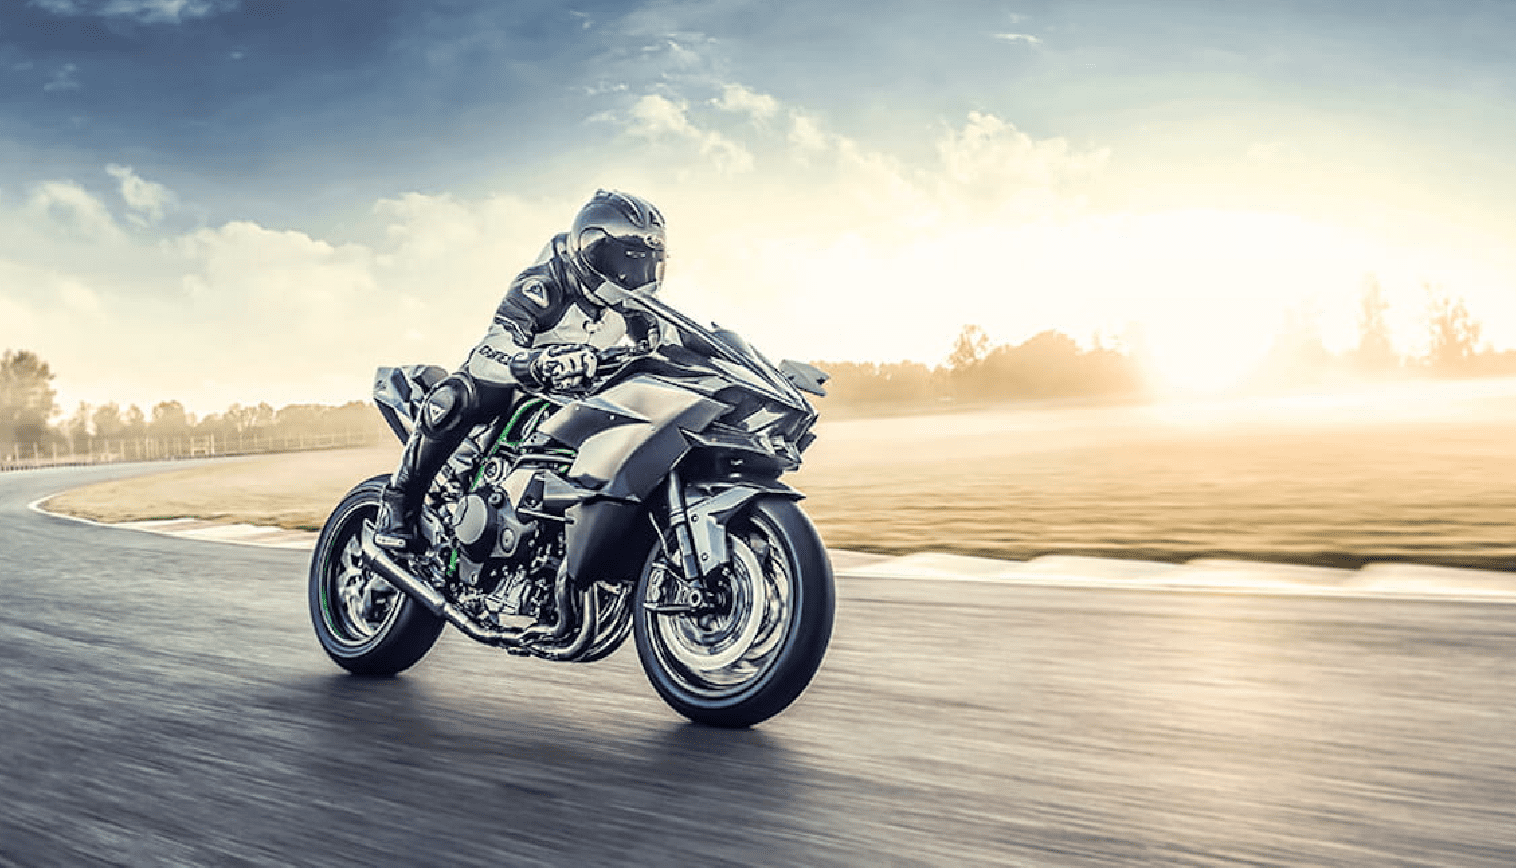 The world’s top 10 fastest bikes in 2022|Kawasaki Ninja H2R|Suzuki Hayabusa|Honda CBR 1100 Blackbird|Kawasaki Ninja ZX 14R|Yamaha YZF R1|BMW S1000RR|MV Agusta F4 RC|Aprilia RSV4|BMW K1300 S|Aprilia RSV 1000 R Mille